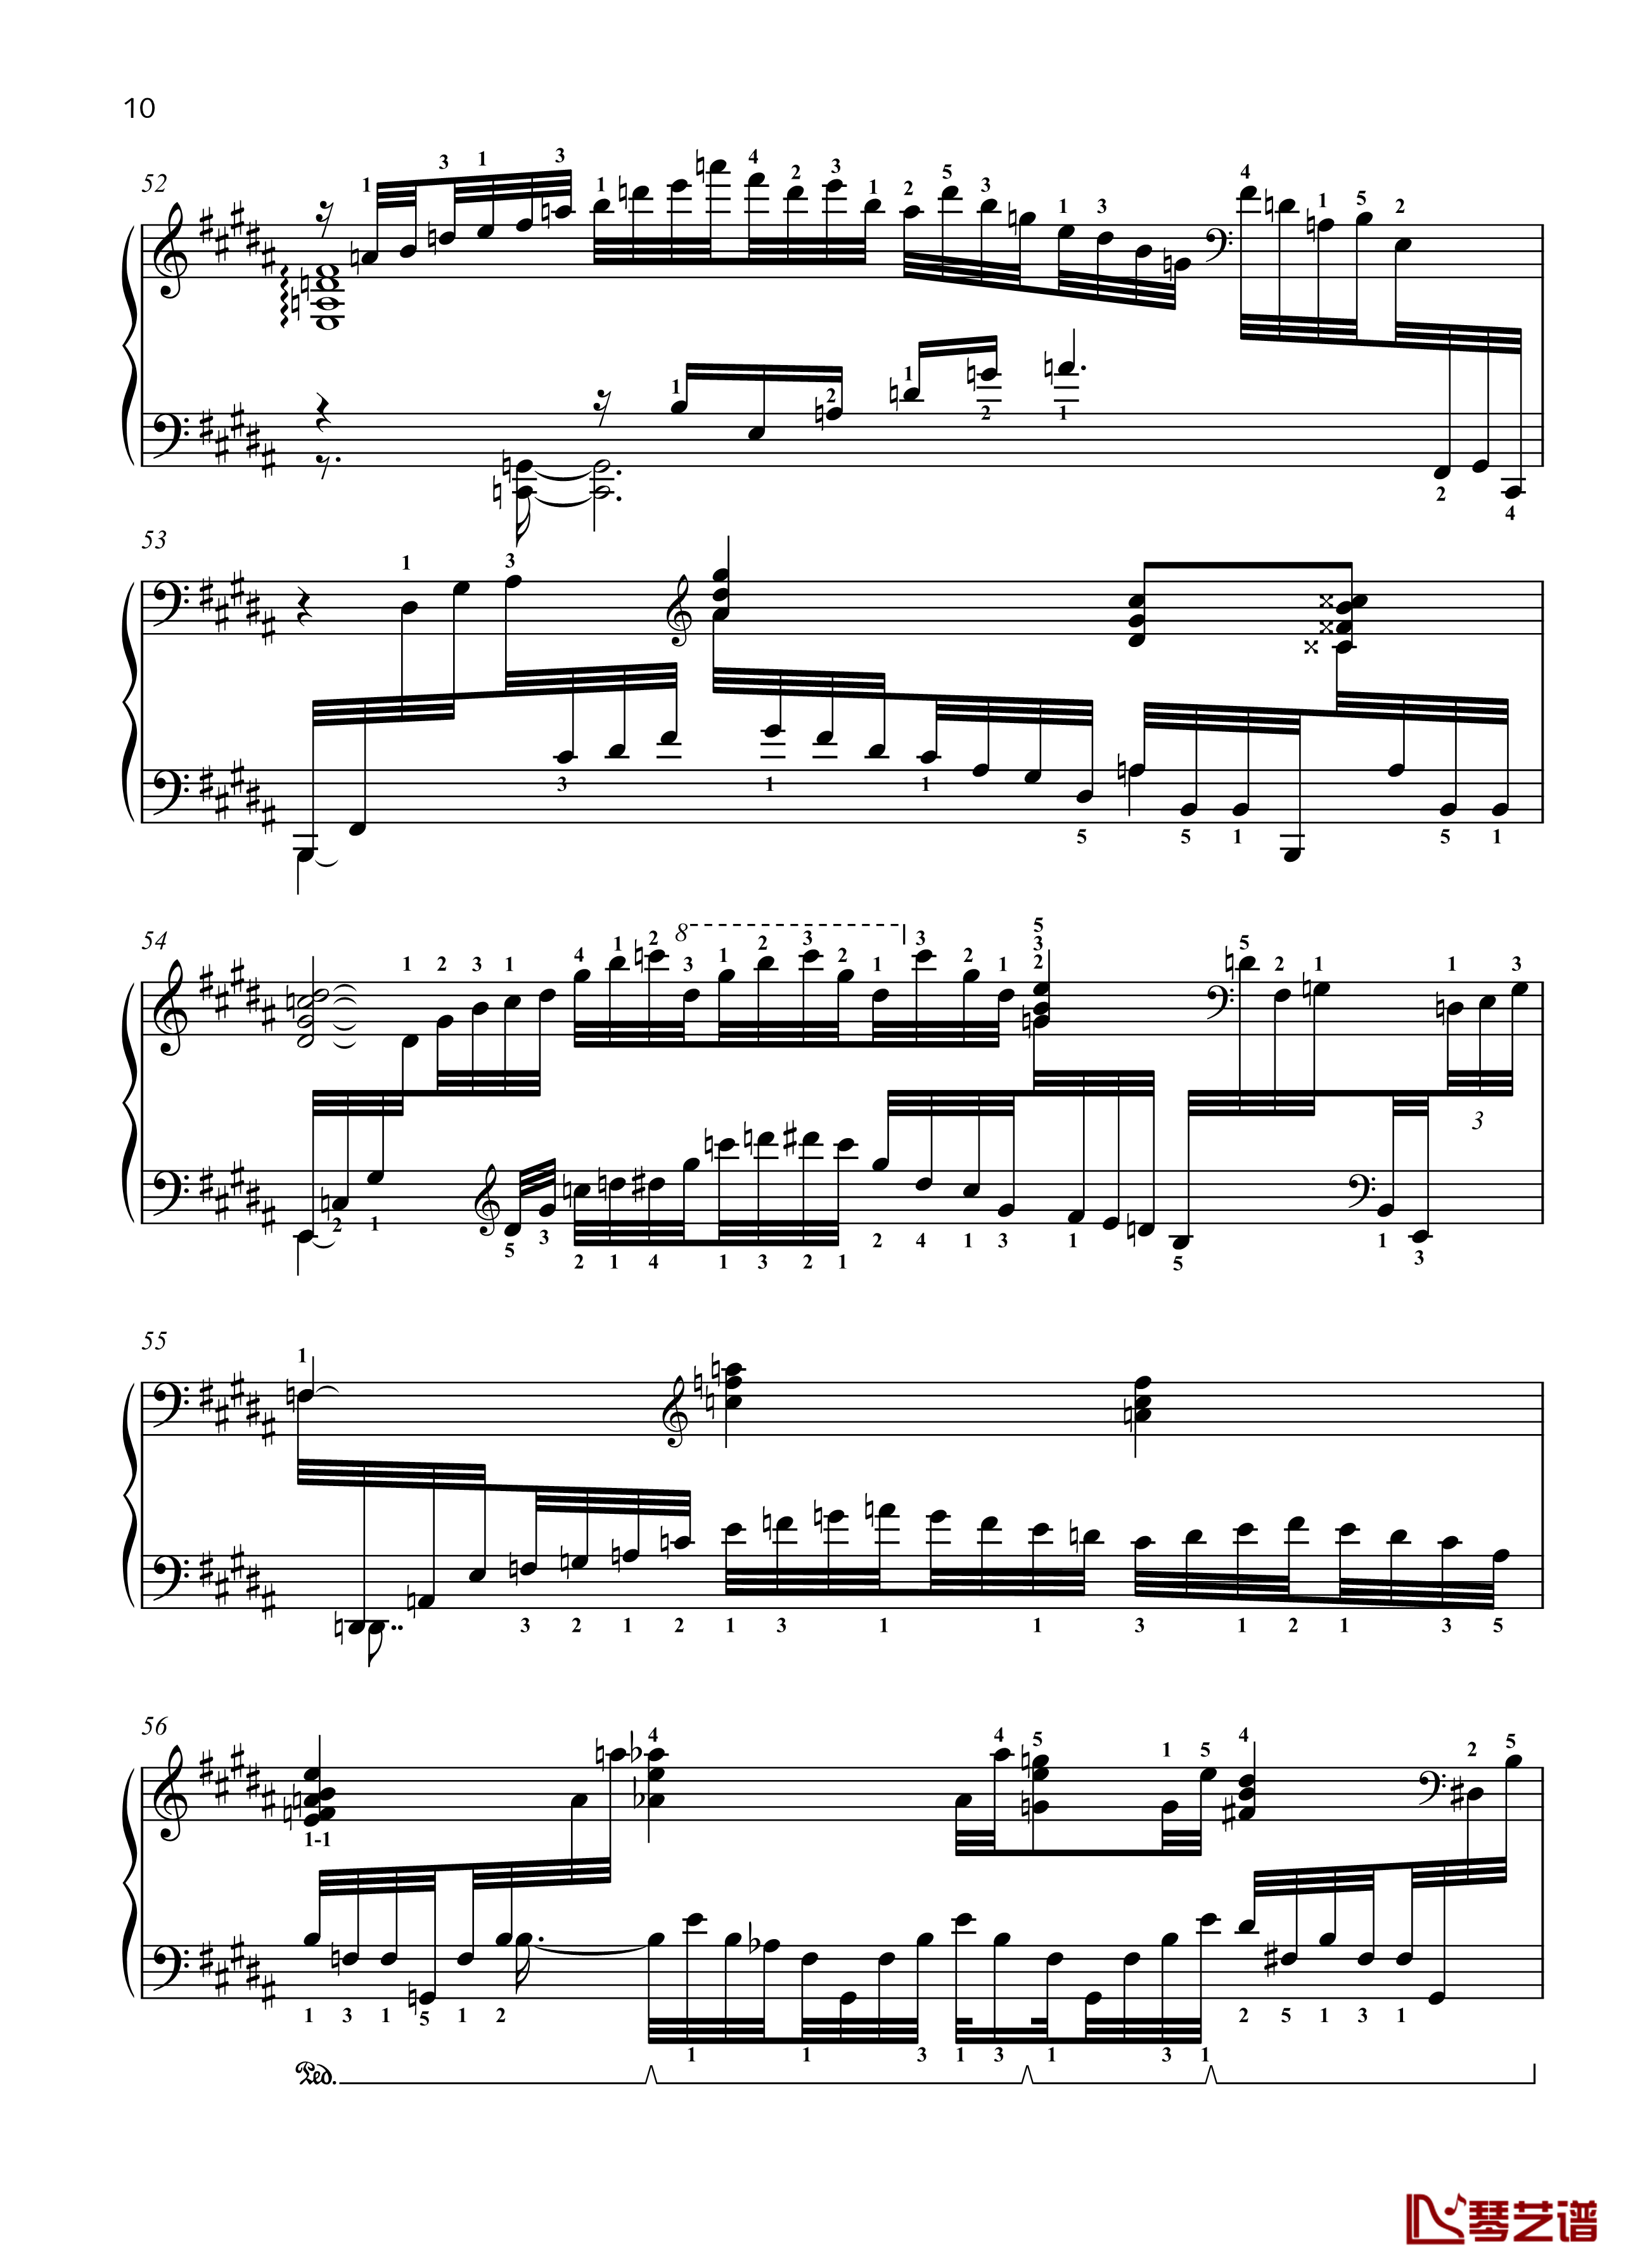 No. 4. Reminiscence钢琴谱-带指法-八首音乐会练习曲  Eight Concert ?tudes Op 40 - -爵士-尼古拉·凯帕斯汀10